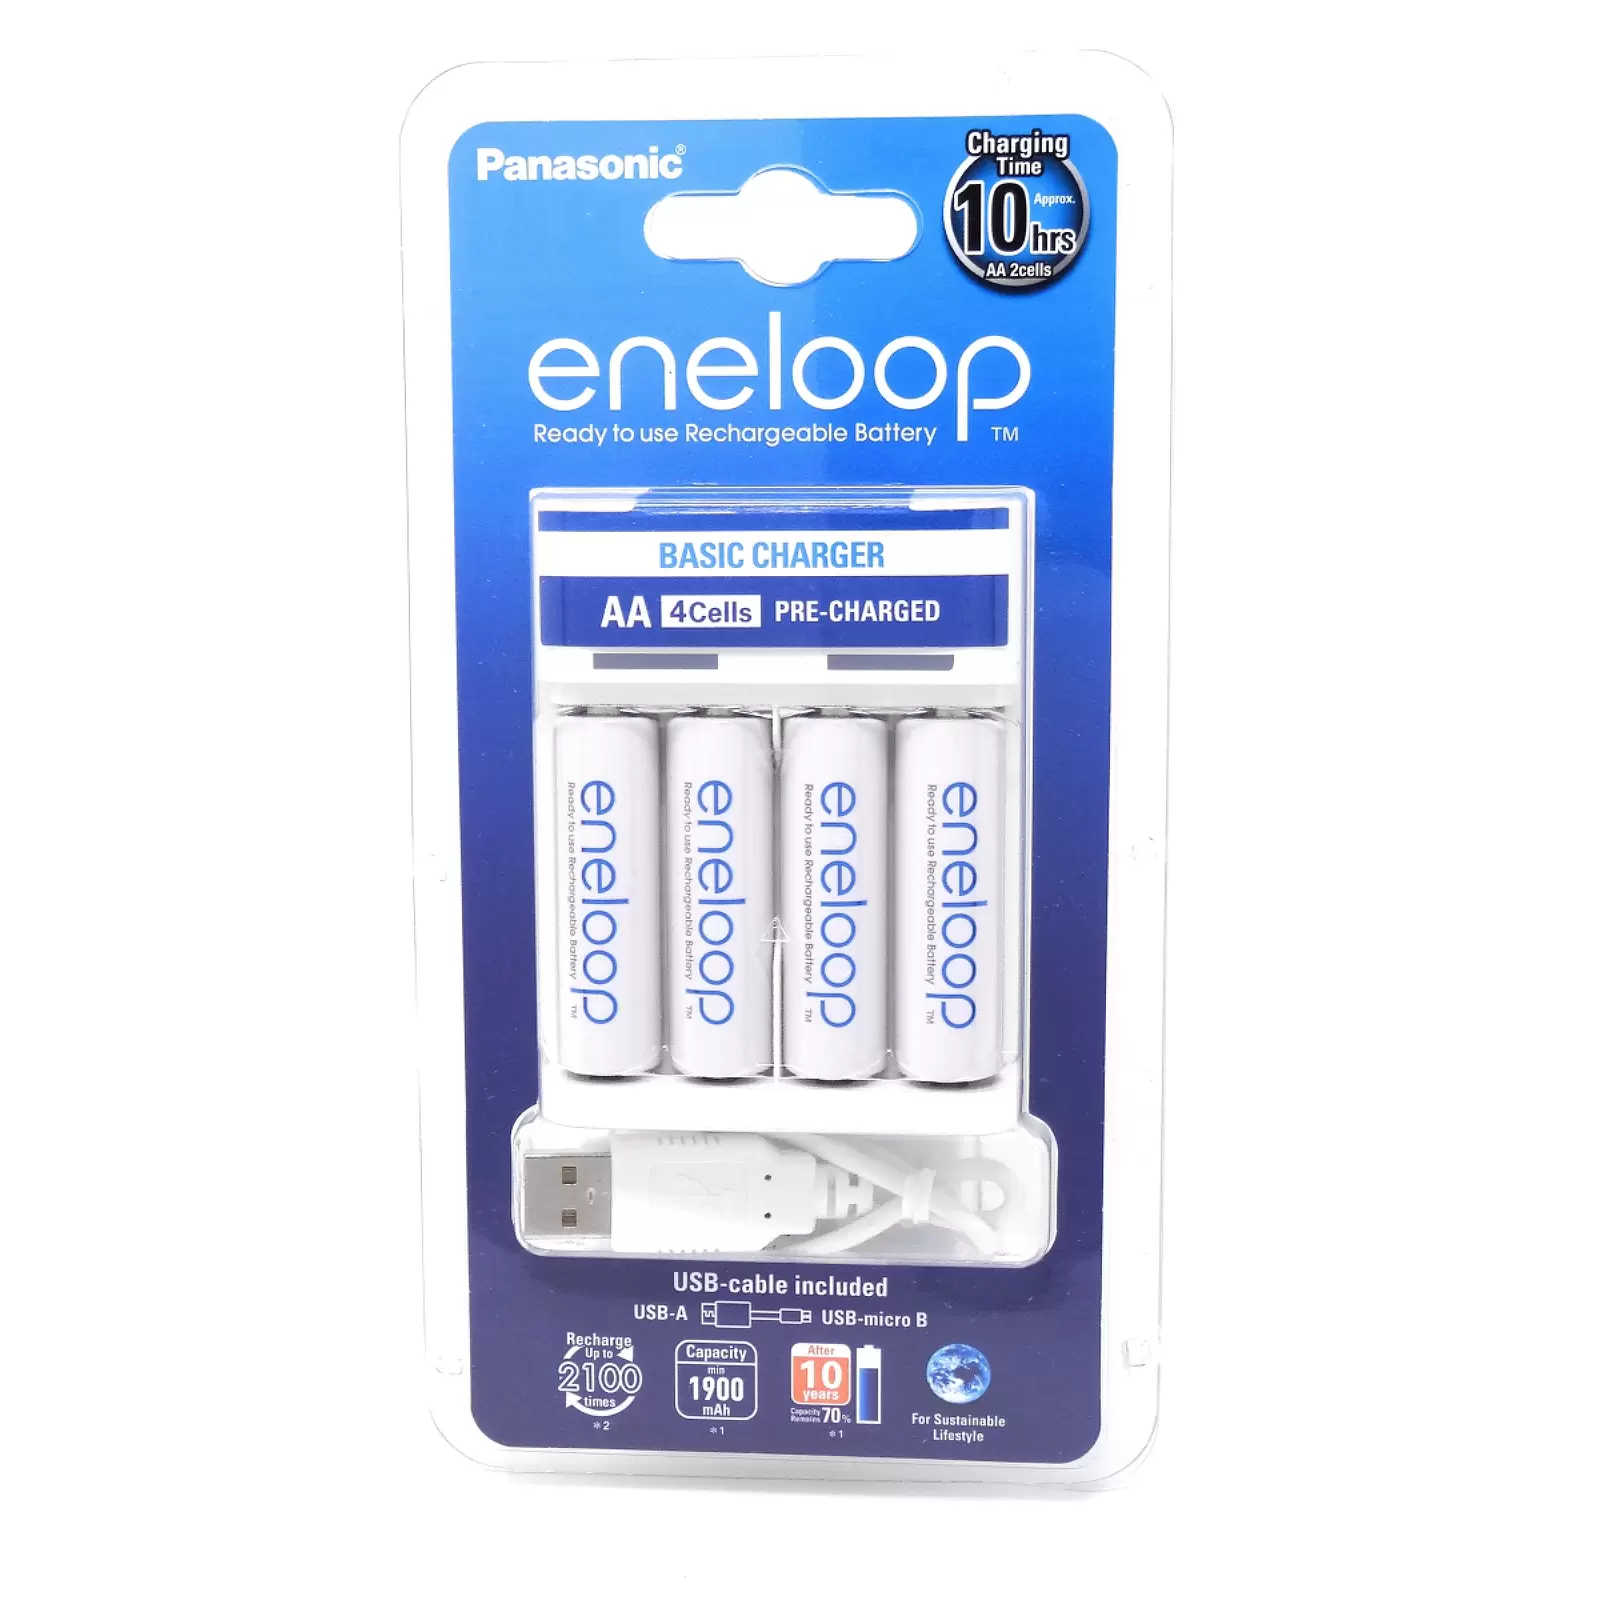 USB Ladegerät Panasonic eneloop BQ-CC61USB inkl. 4x AA eneloop Akkus 1,9Ah & Micro USB-Kabel